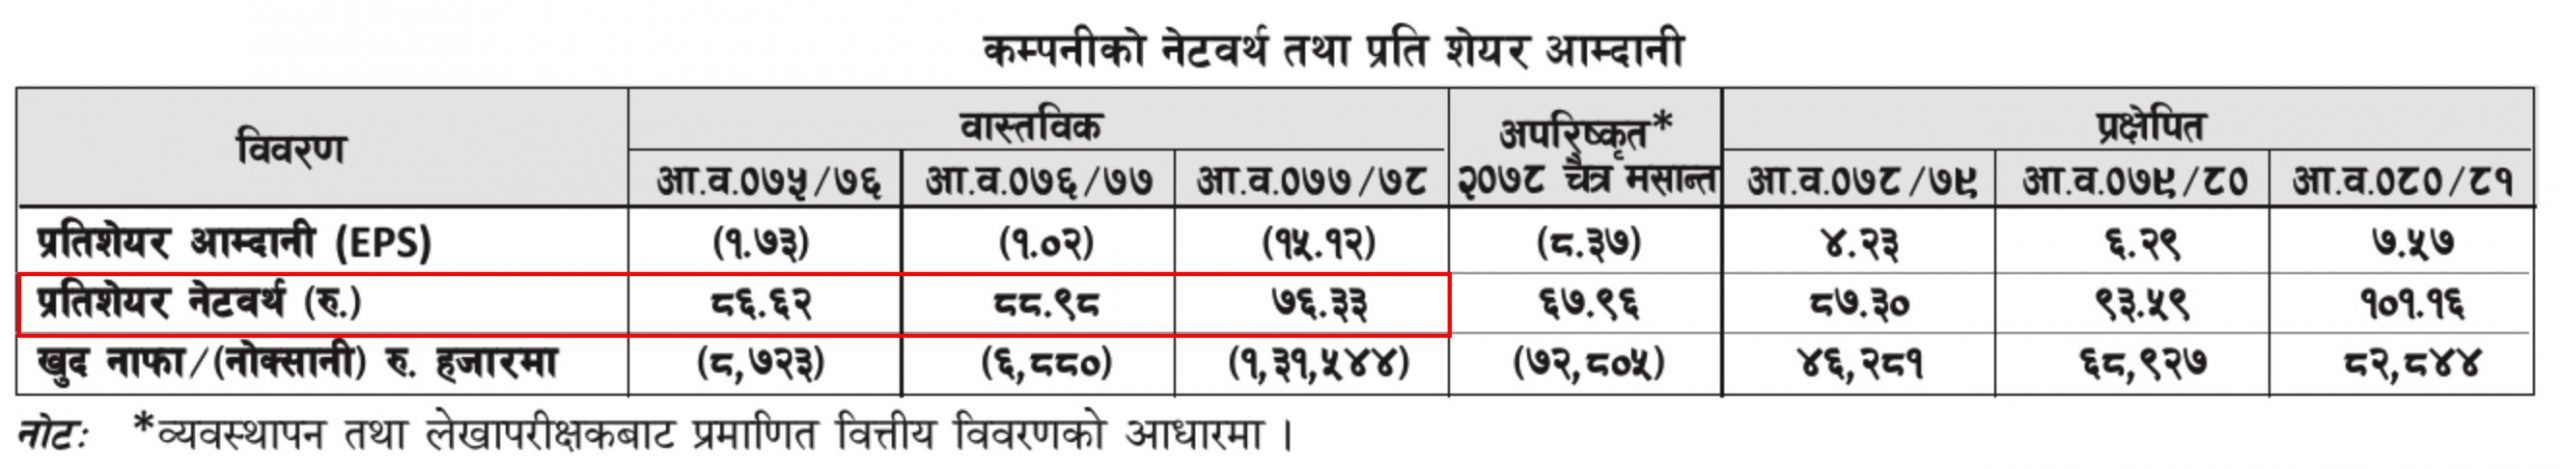 financial ratio of himalayan hydropower